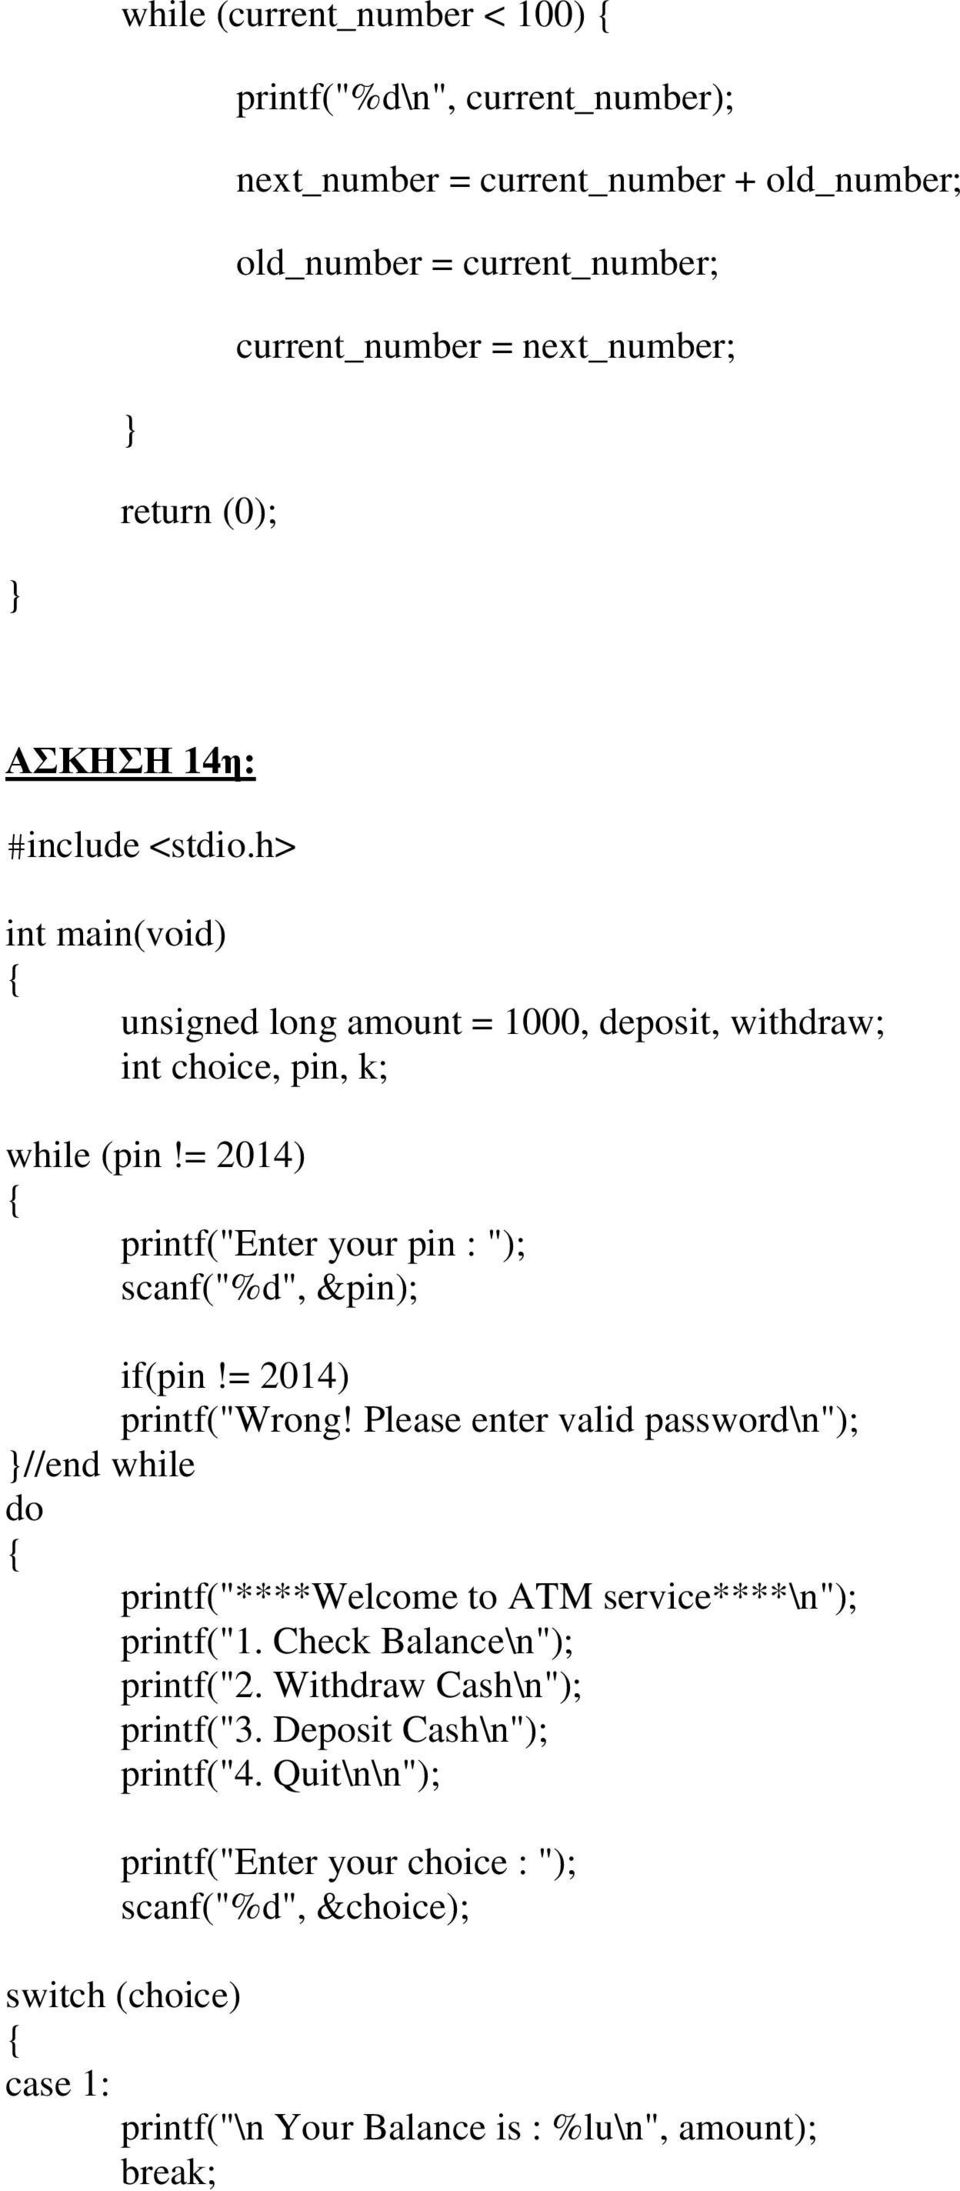 = 2014) printf("wrong! Please enter valid password\n"); //end while do printf("****welcome to ATM service****\n"); printf("1. Check Balance\n"); printf("2.